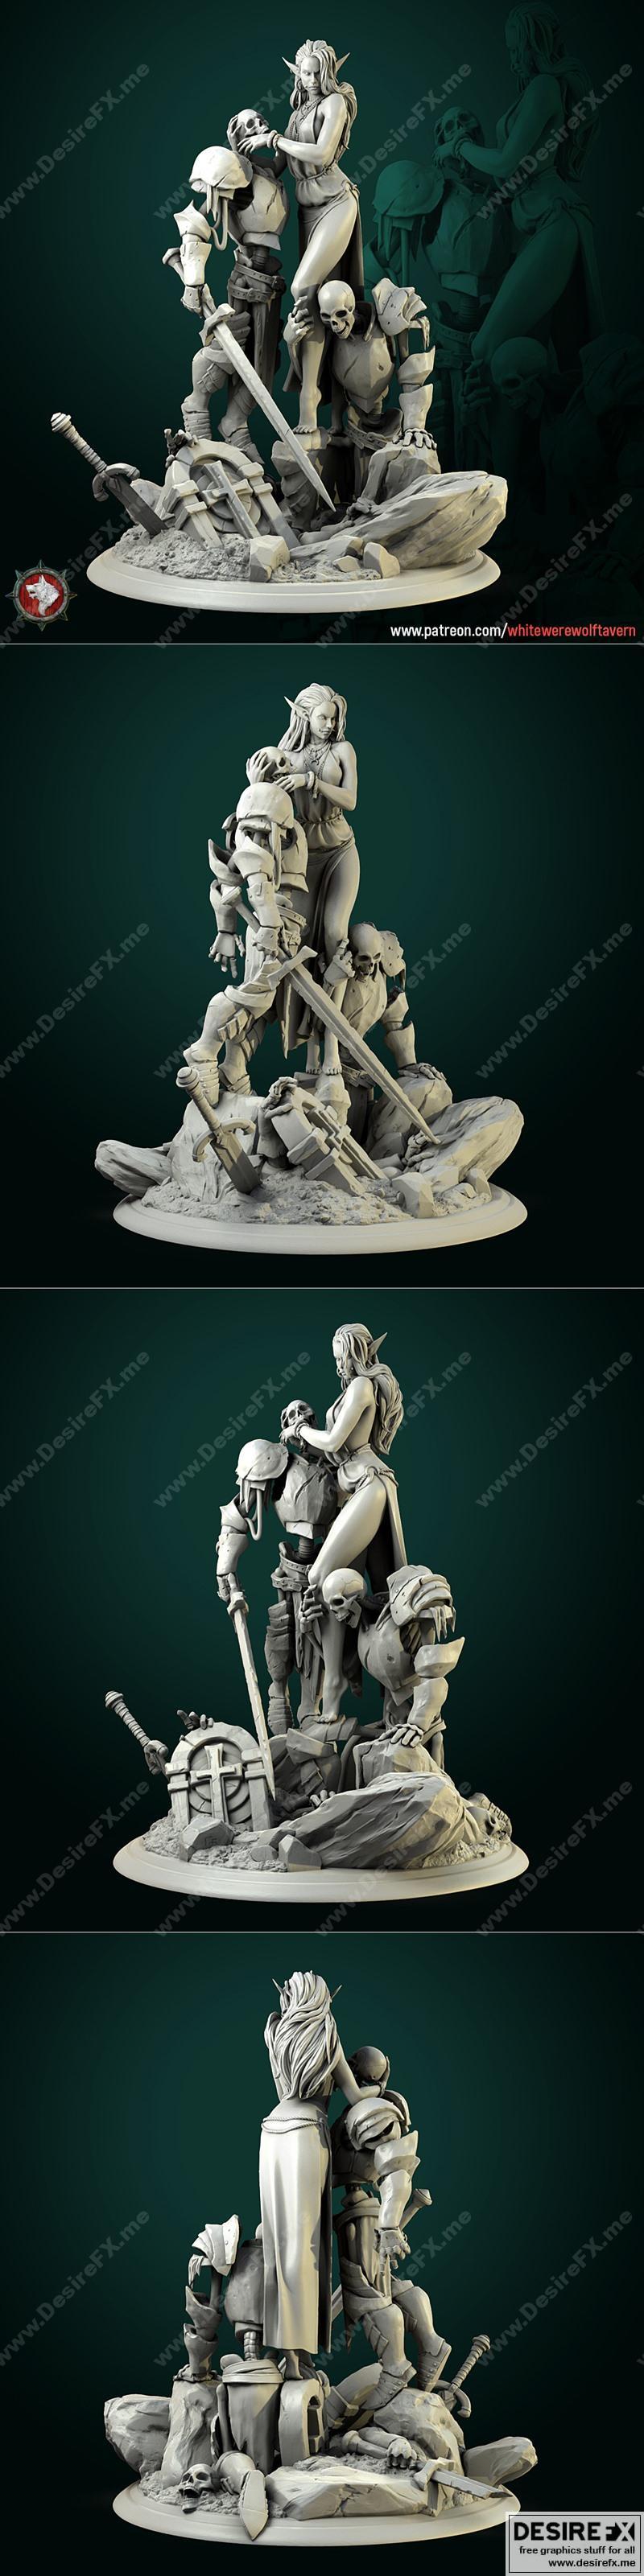 Desire FX 3d models | Diorama Laedria the Necromancer with skeletons ...